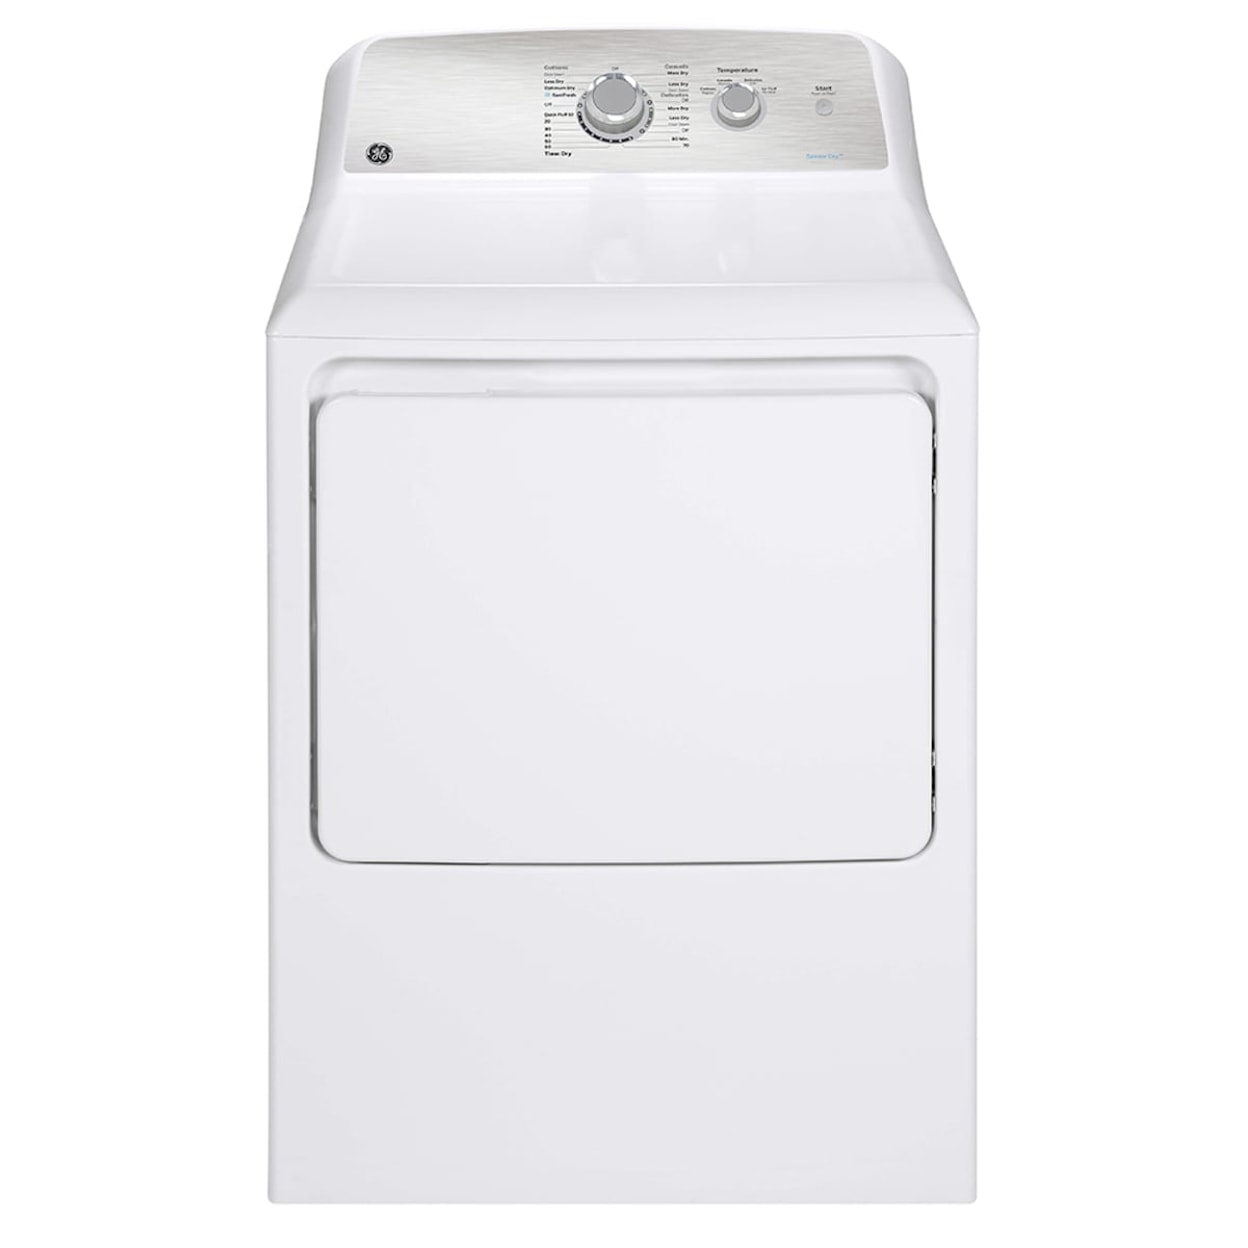 GE Appliances Dryers Top Load Dryer